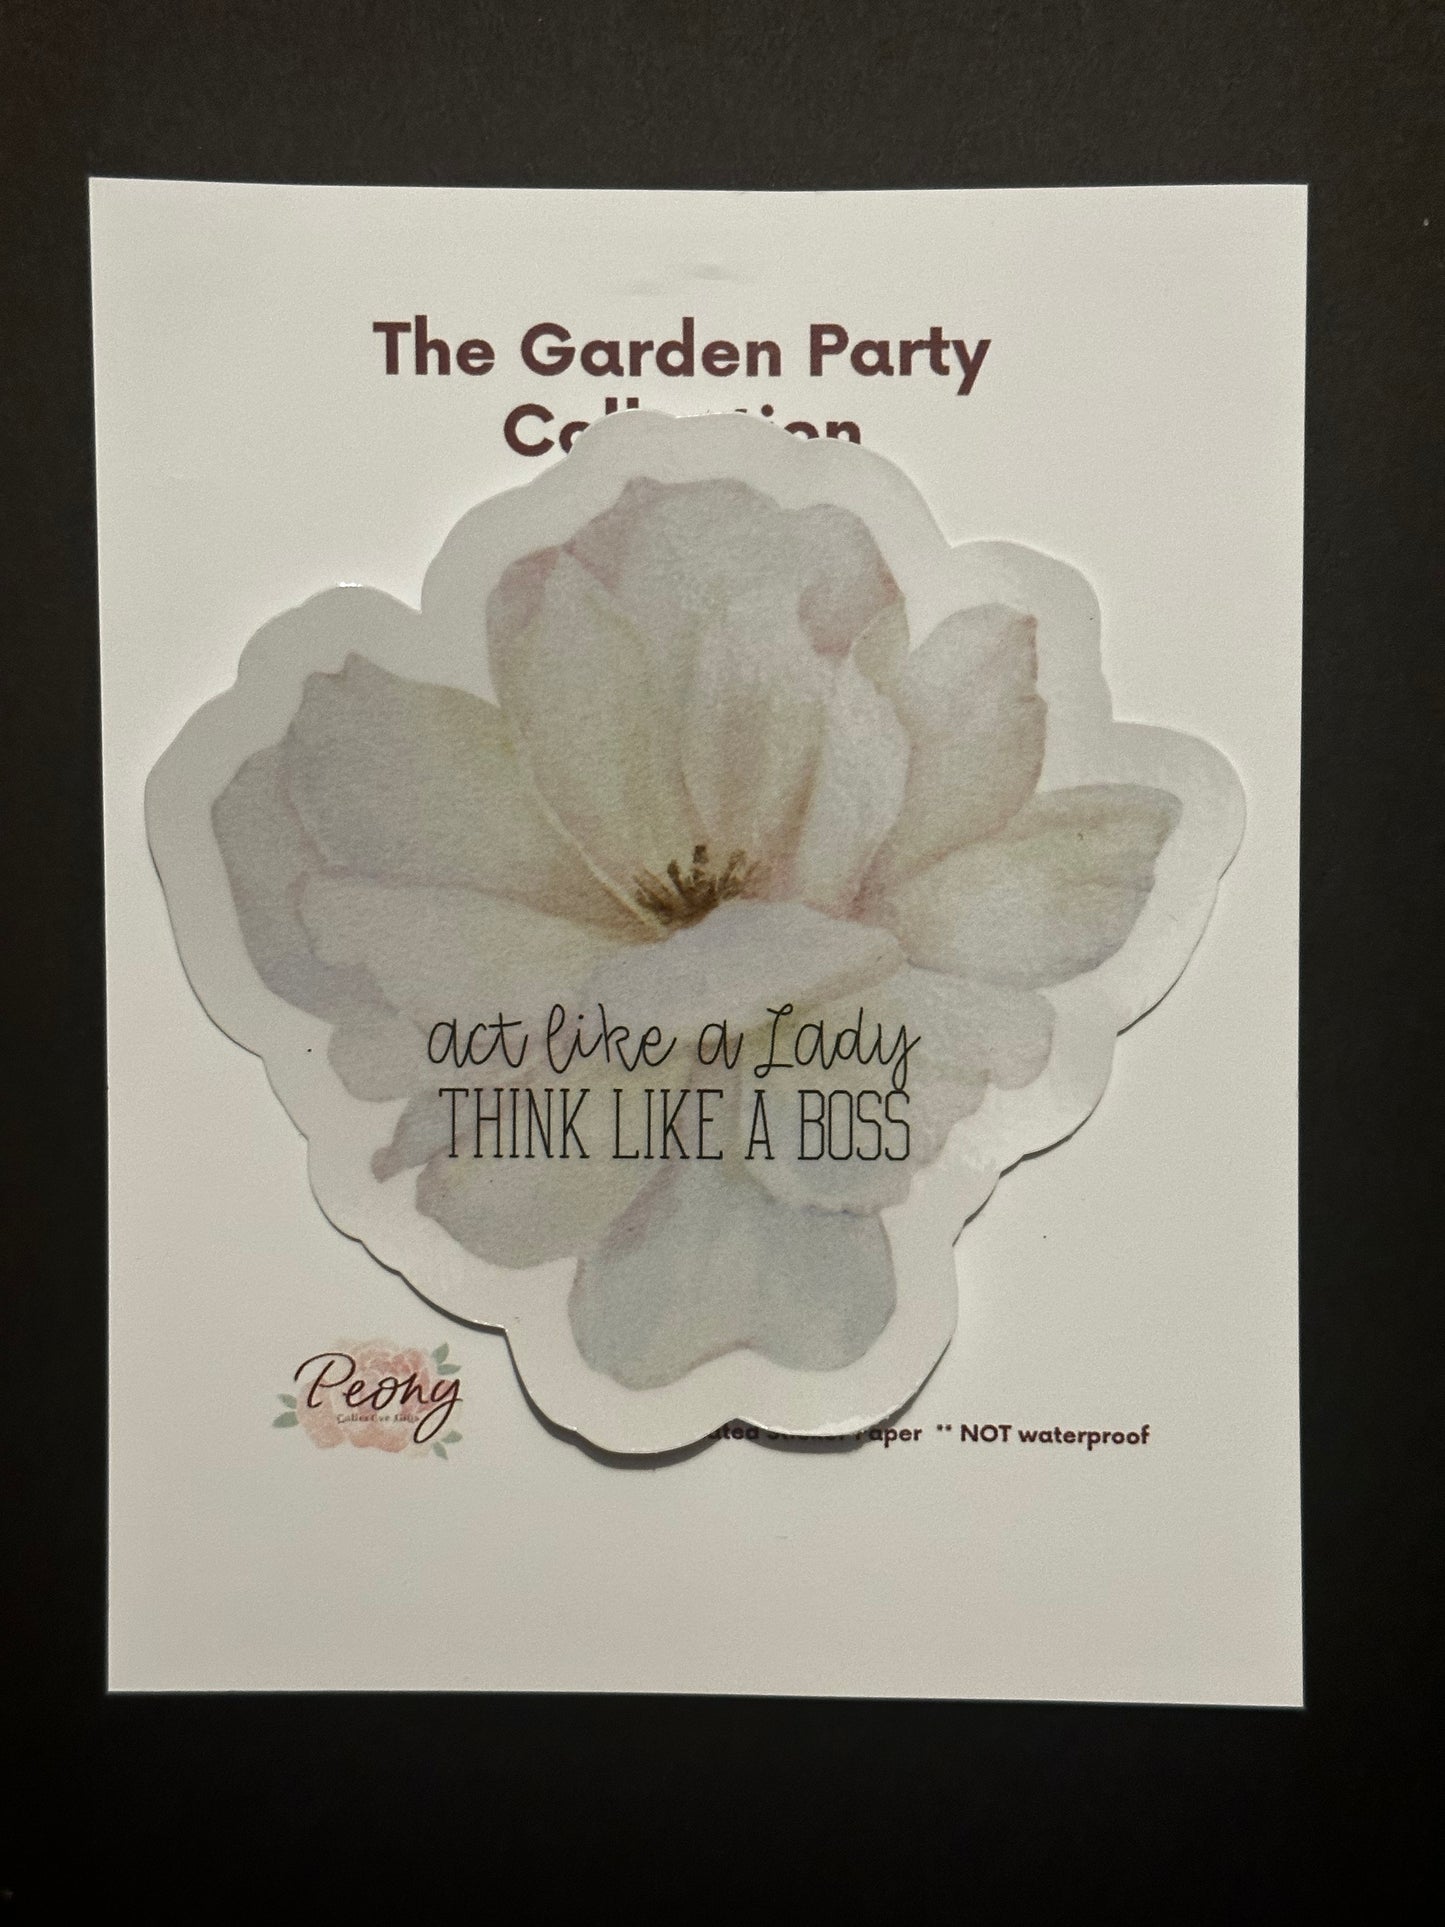 Garden Party Sticker Collection